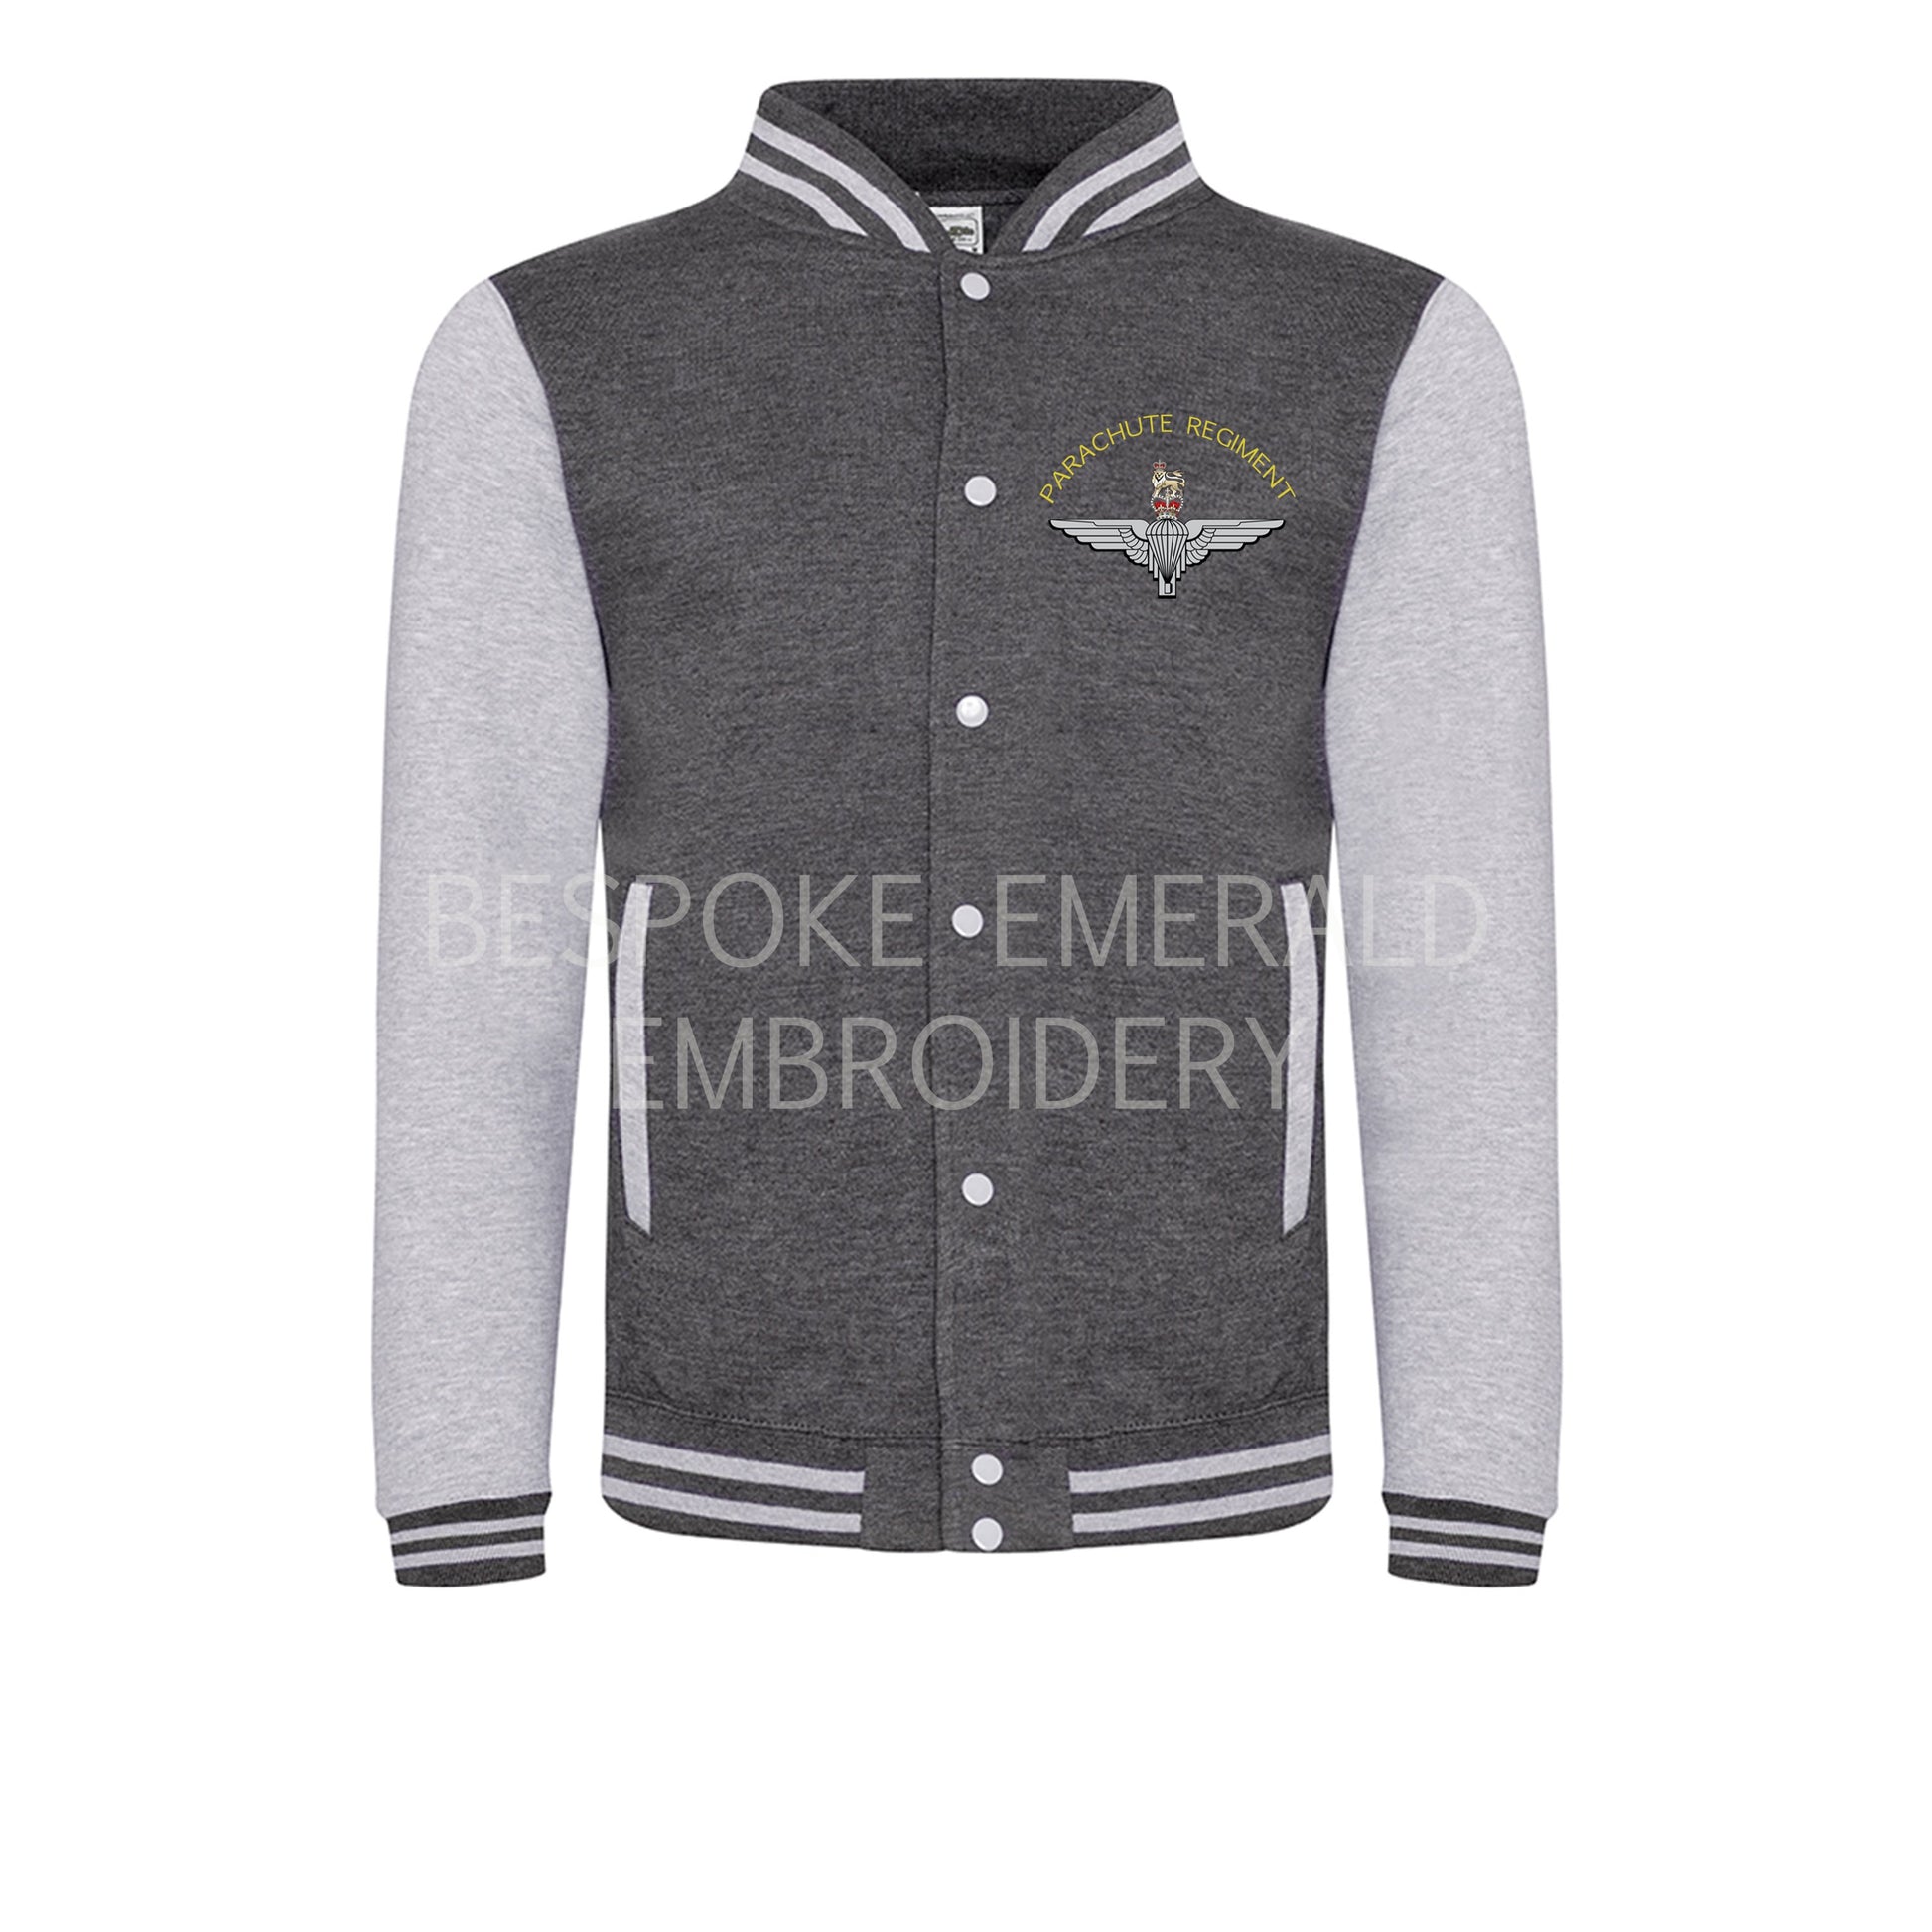 JH043 - Baseball varsity Jacket - Bespoke Emerald Embroidery Ltd